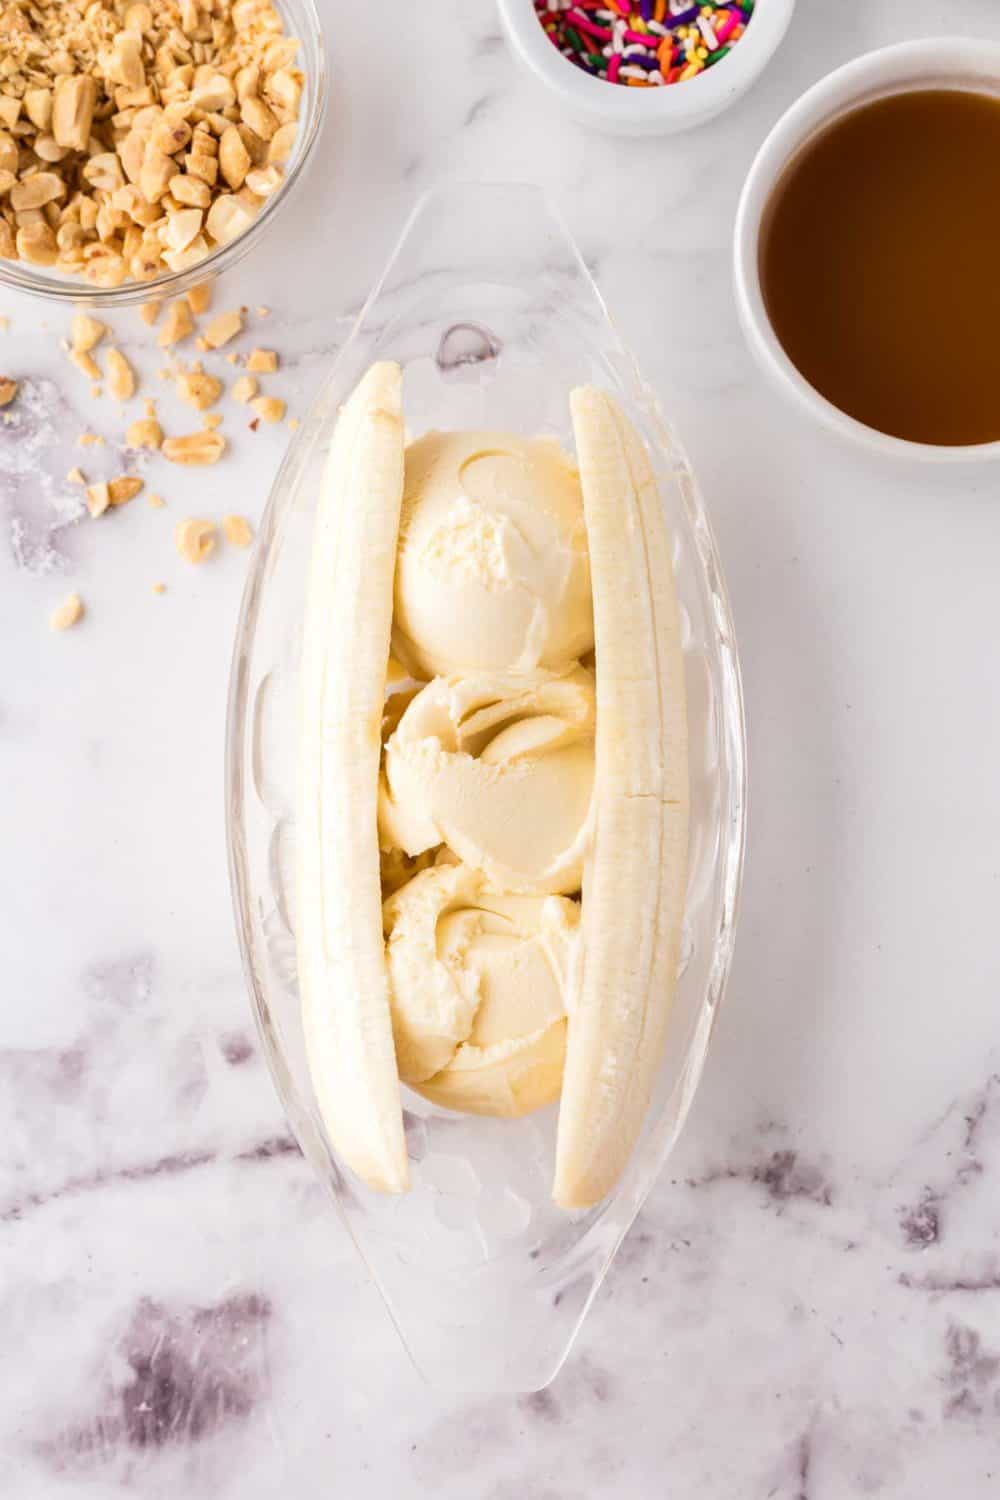 oval dish with banana split making in progress with bananas and vanilla ice cream.